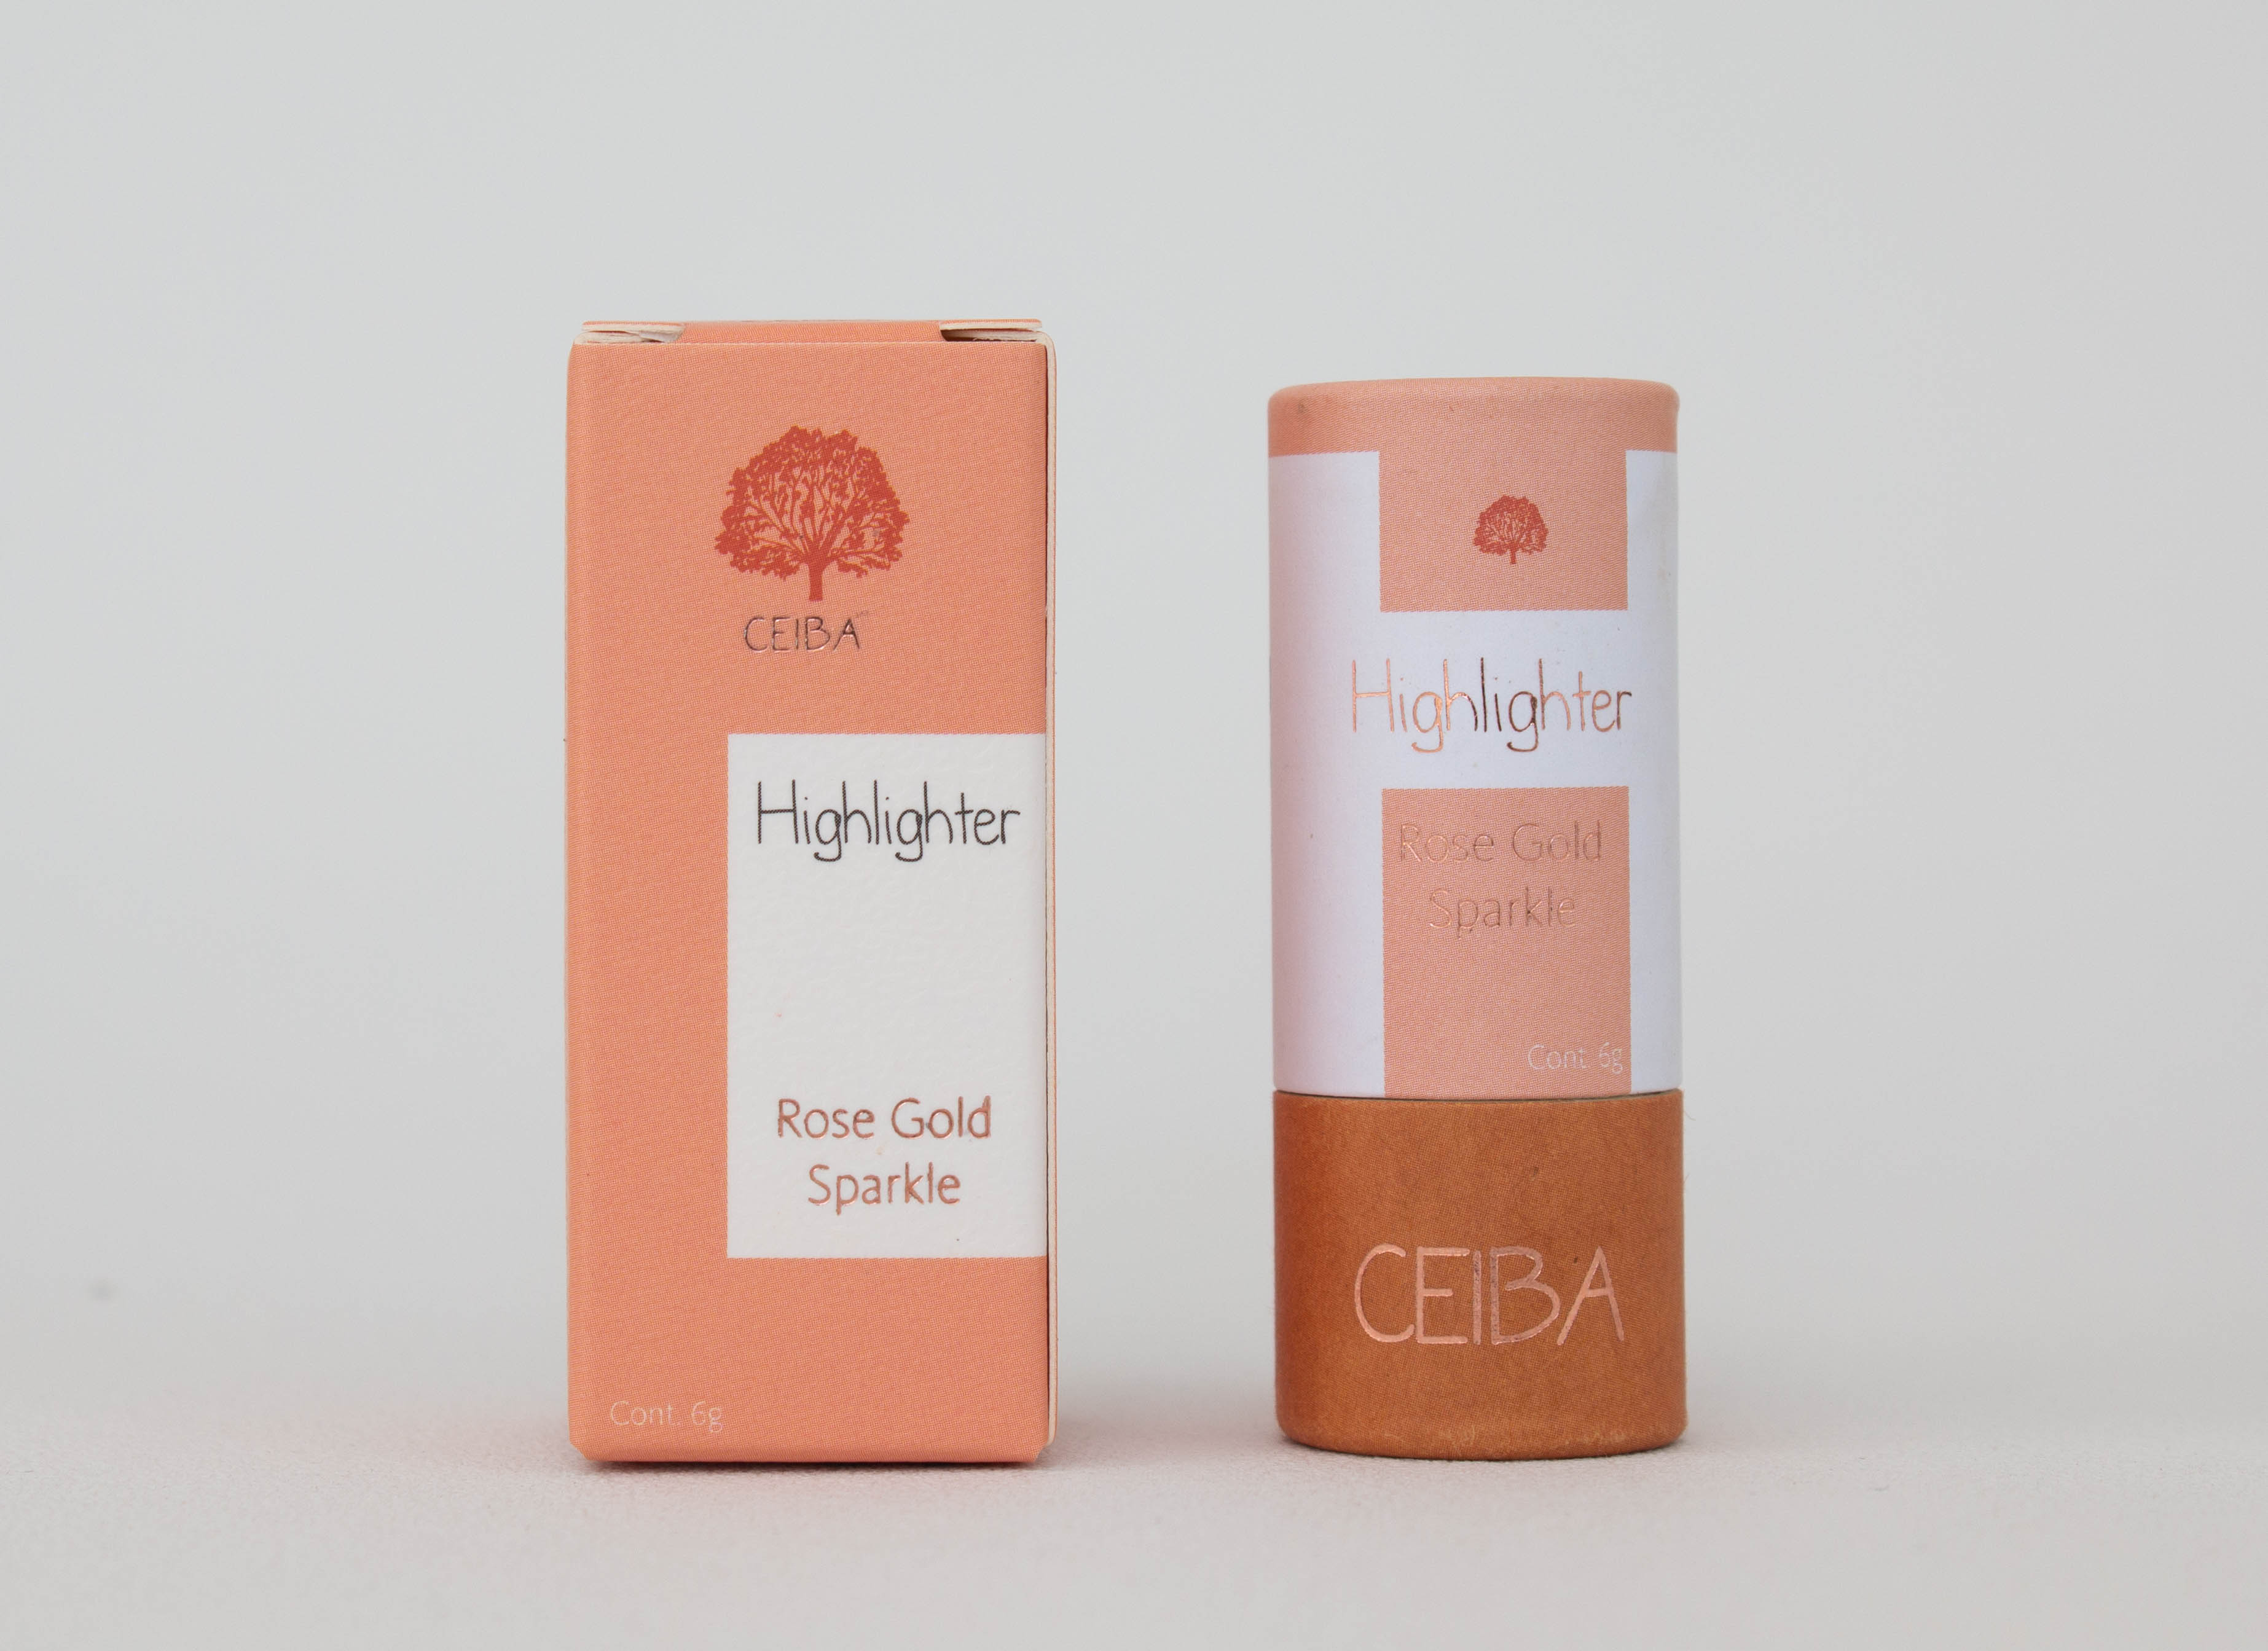 Ceiba- Highlighter Rose Gold Sparkle